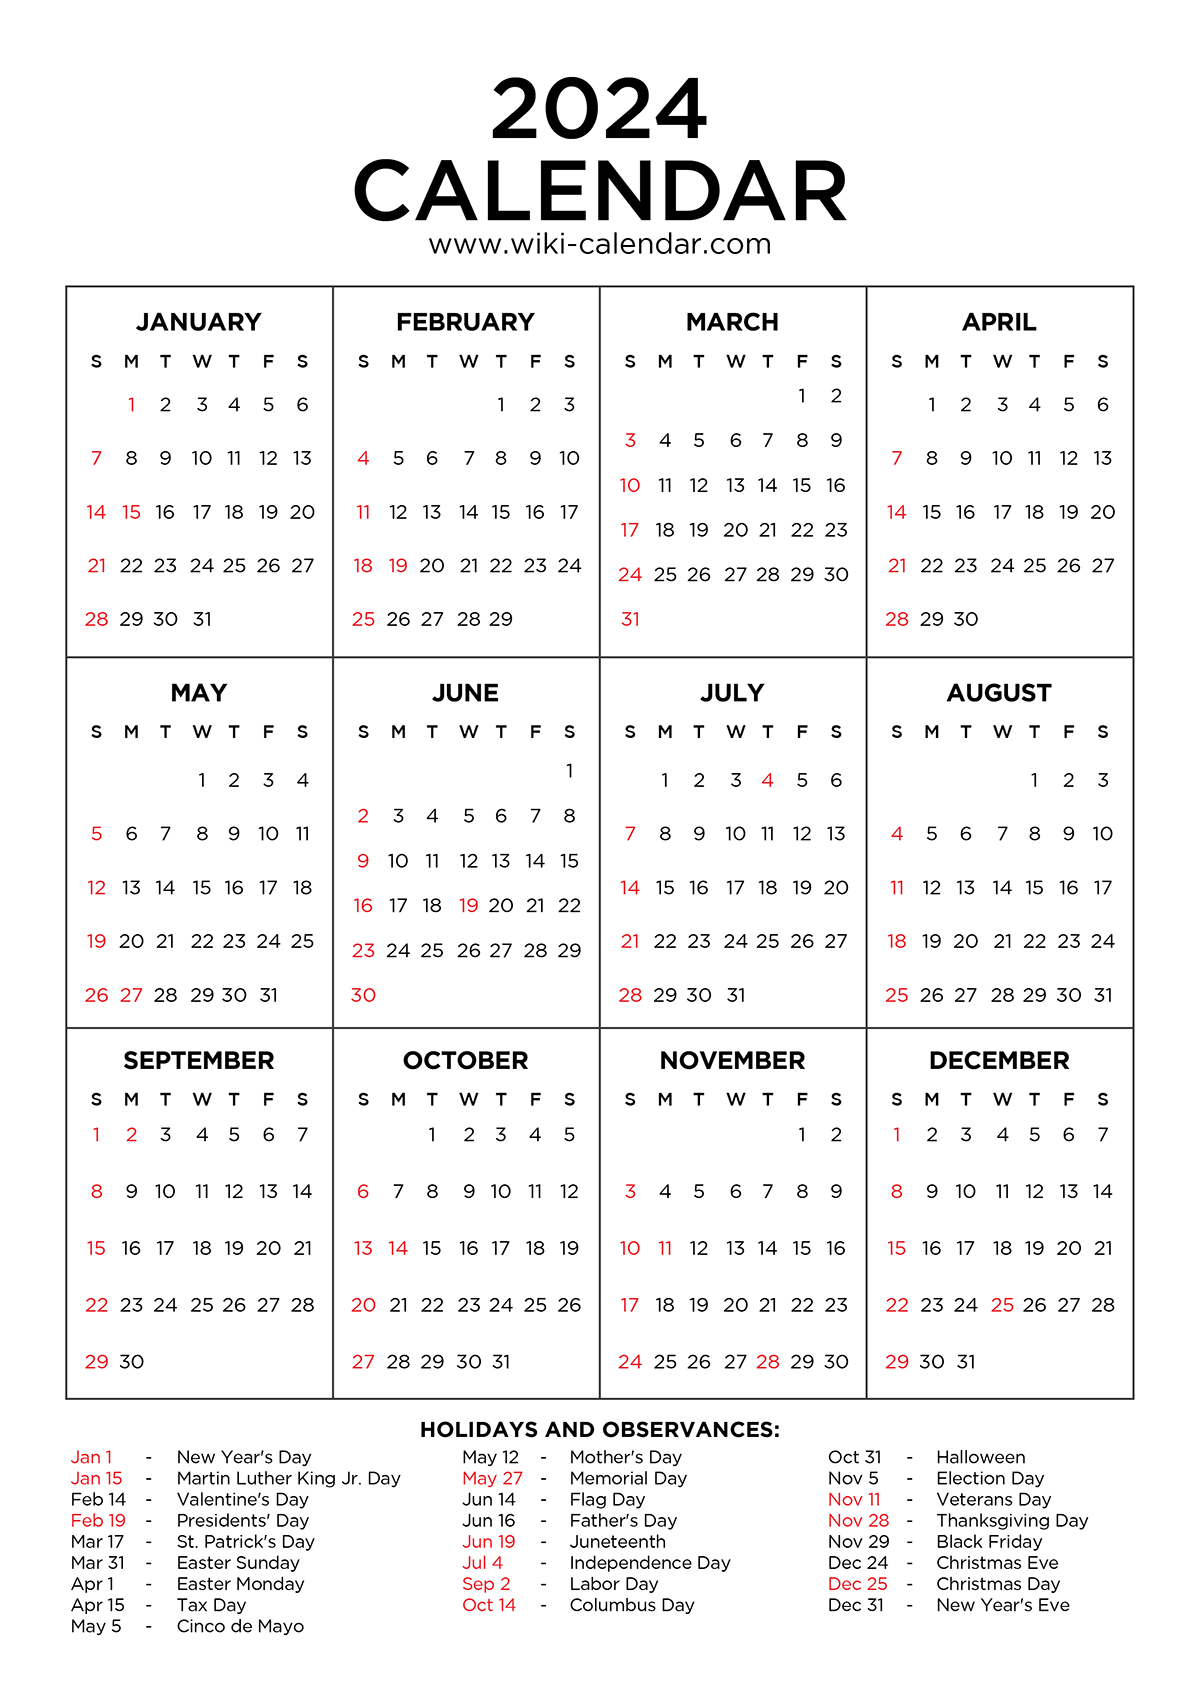 Year 2024 Calendar Printable With Holidays - Wiki Calendar intended for Free Printable Calendar 2024 With Us Holidays